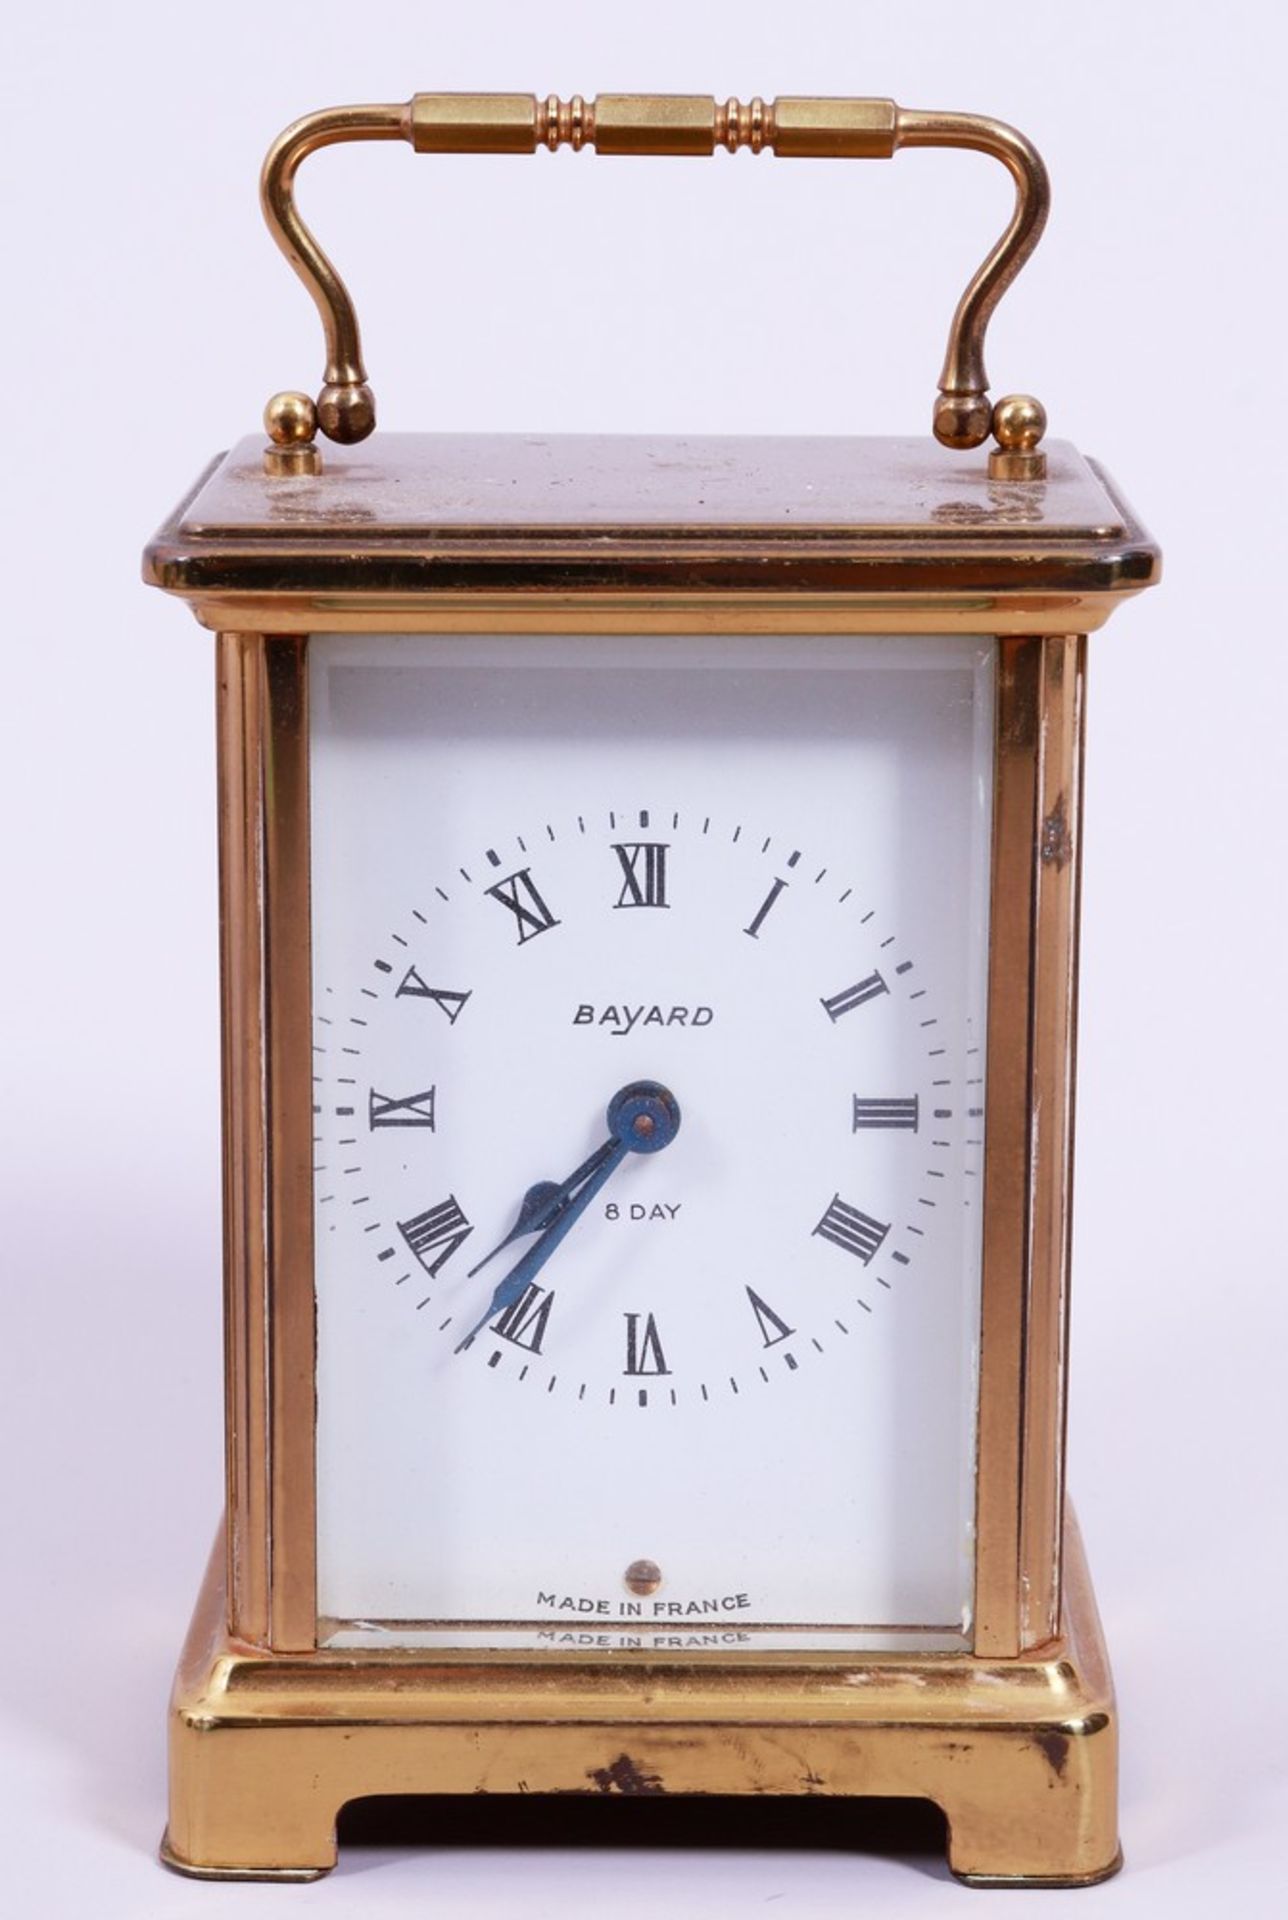 Small carriage clock, Duverdrey & Bloquel Bayard, France, c. 1900/20